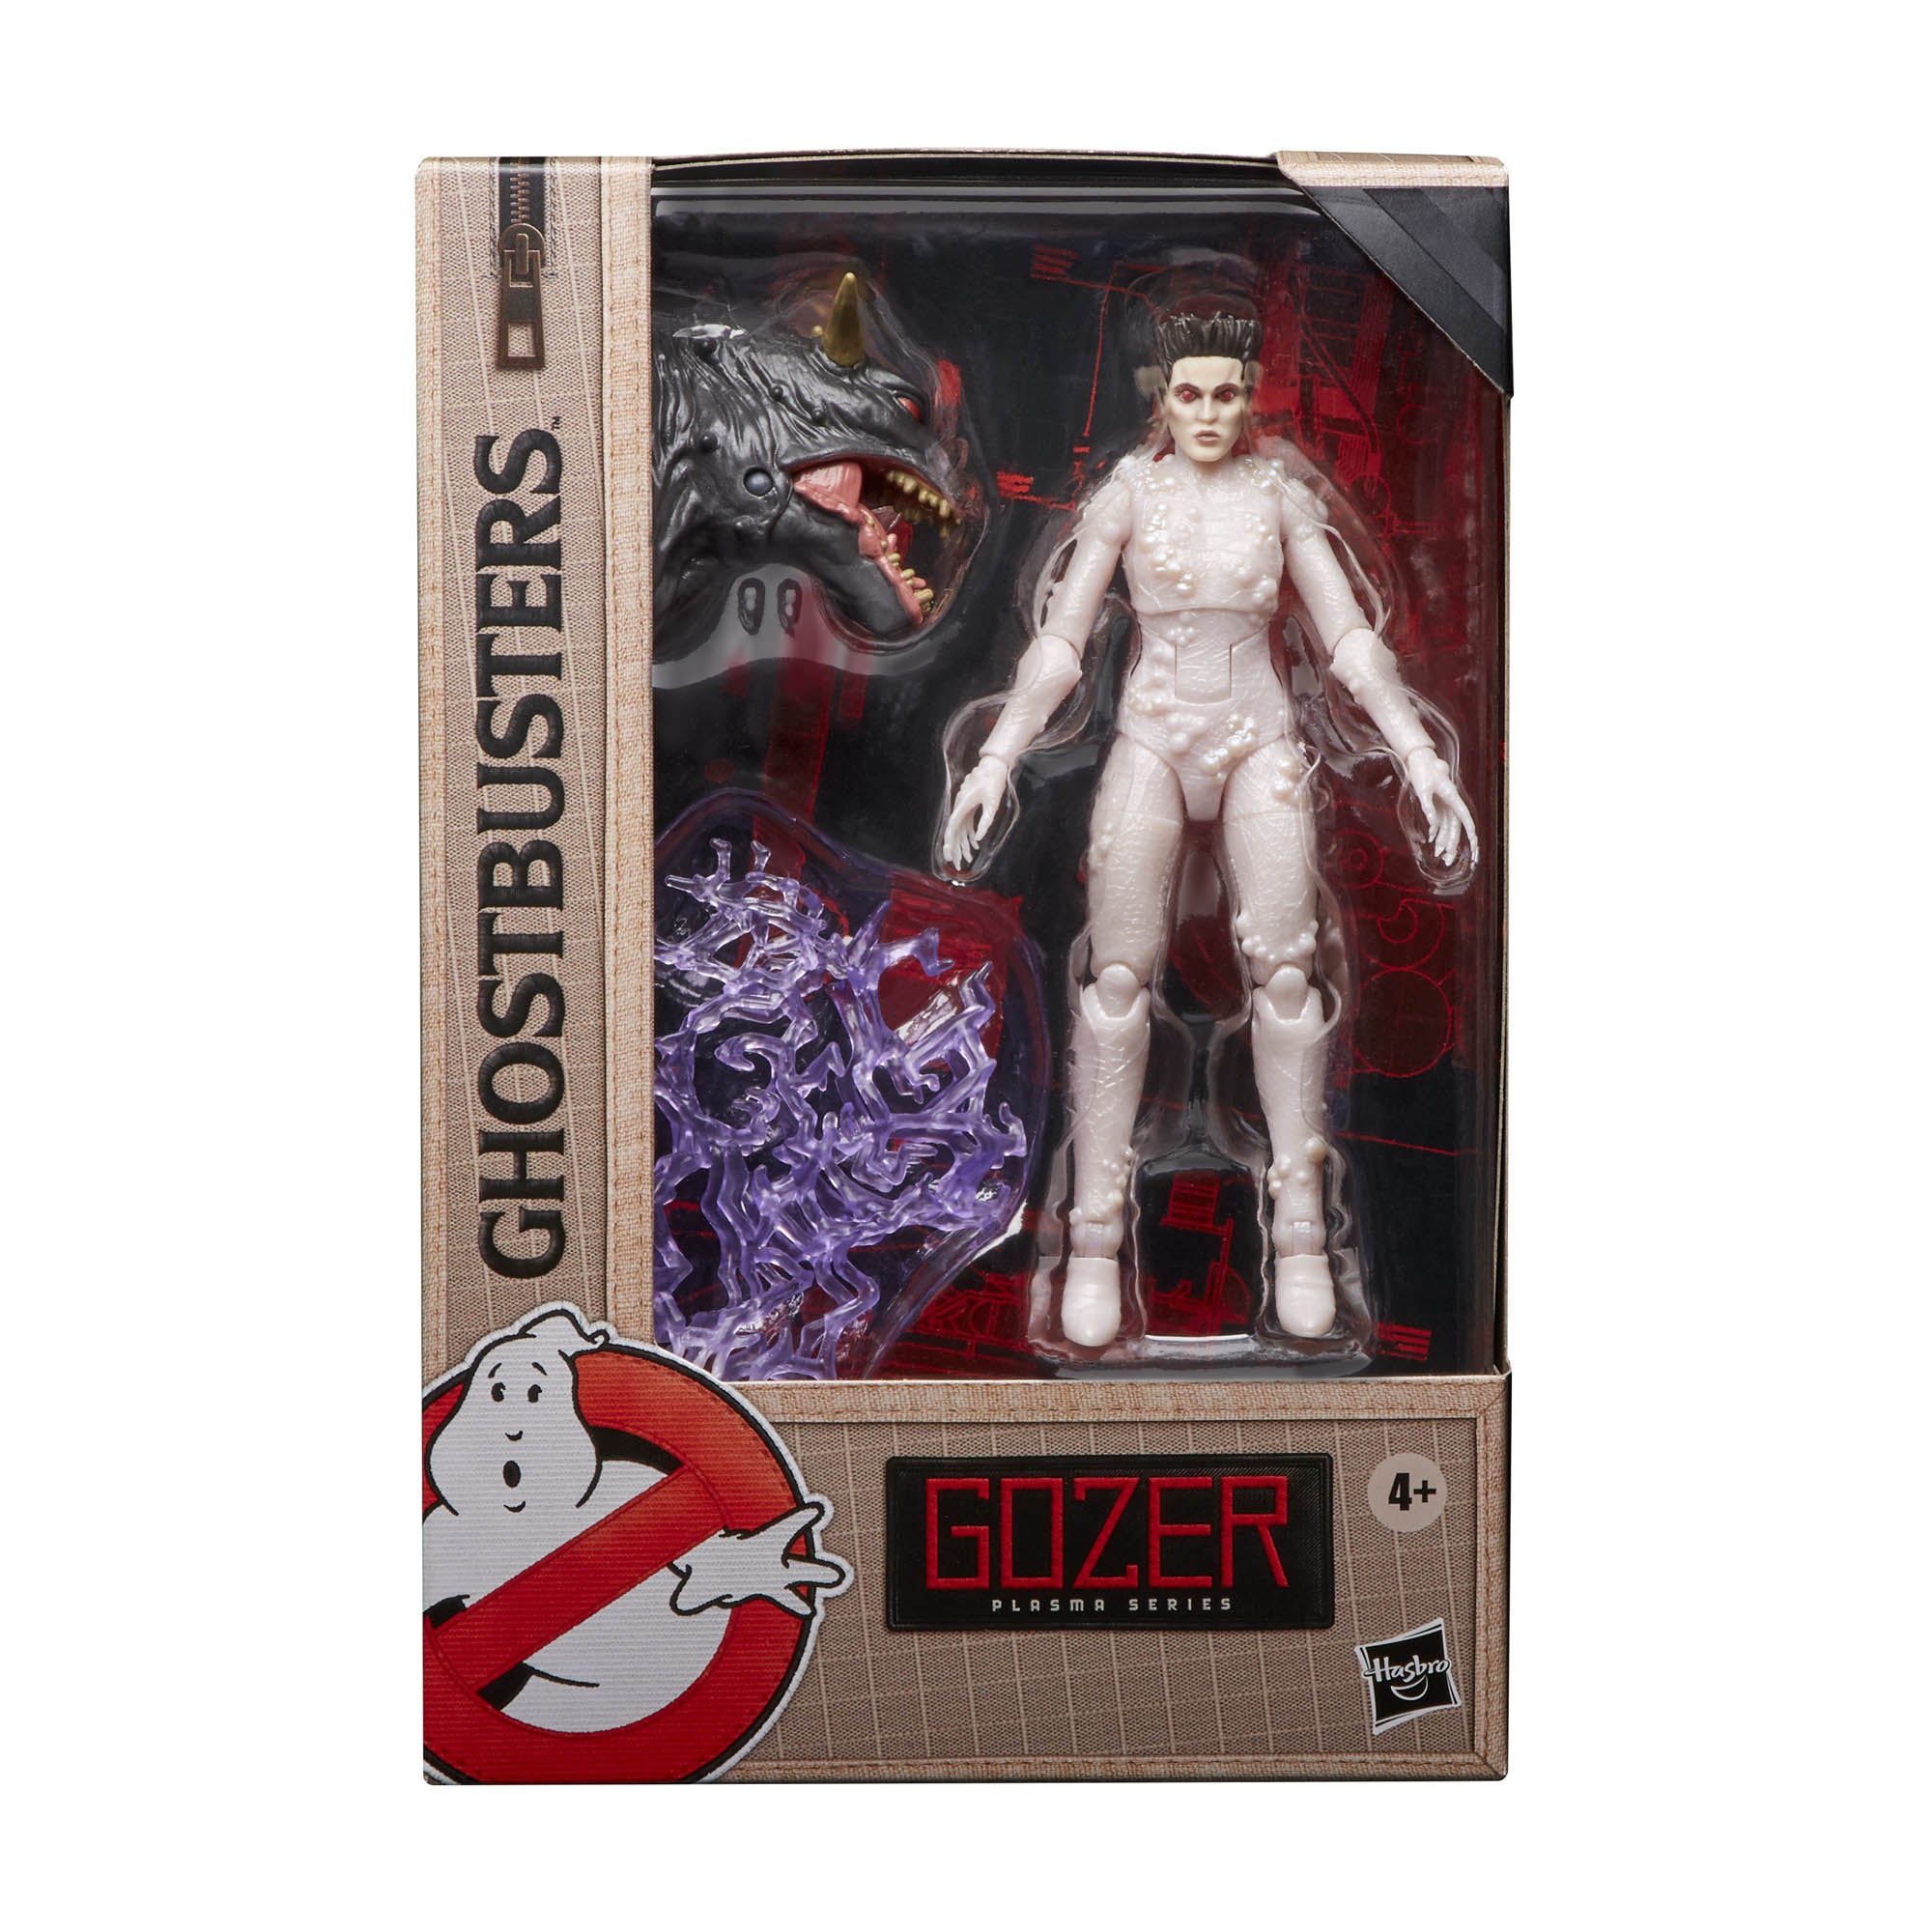 Ghostbusters Plasma Series 6" Gozer